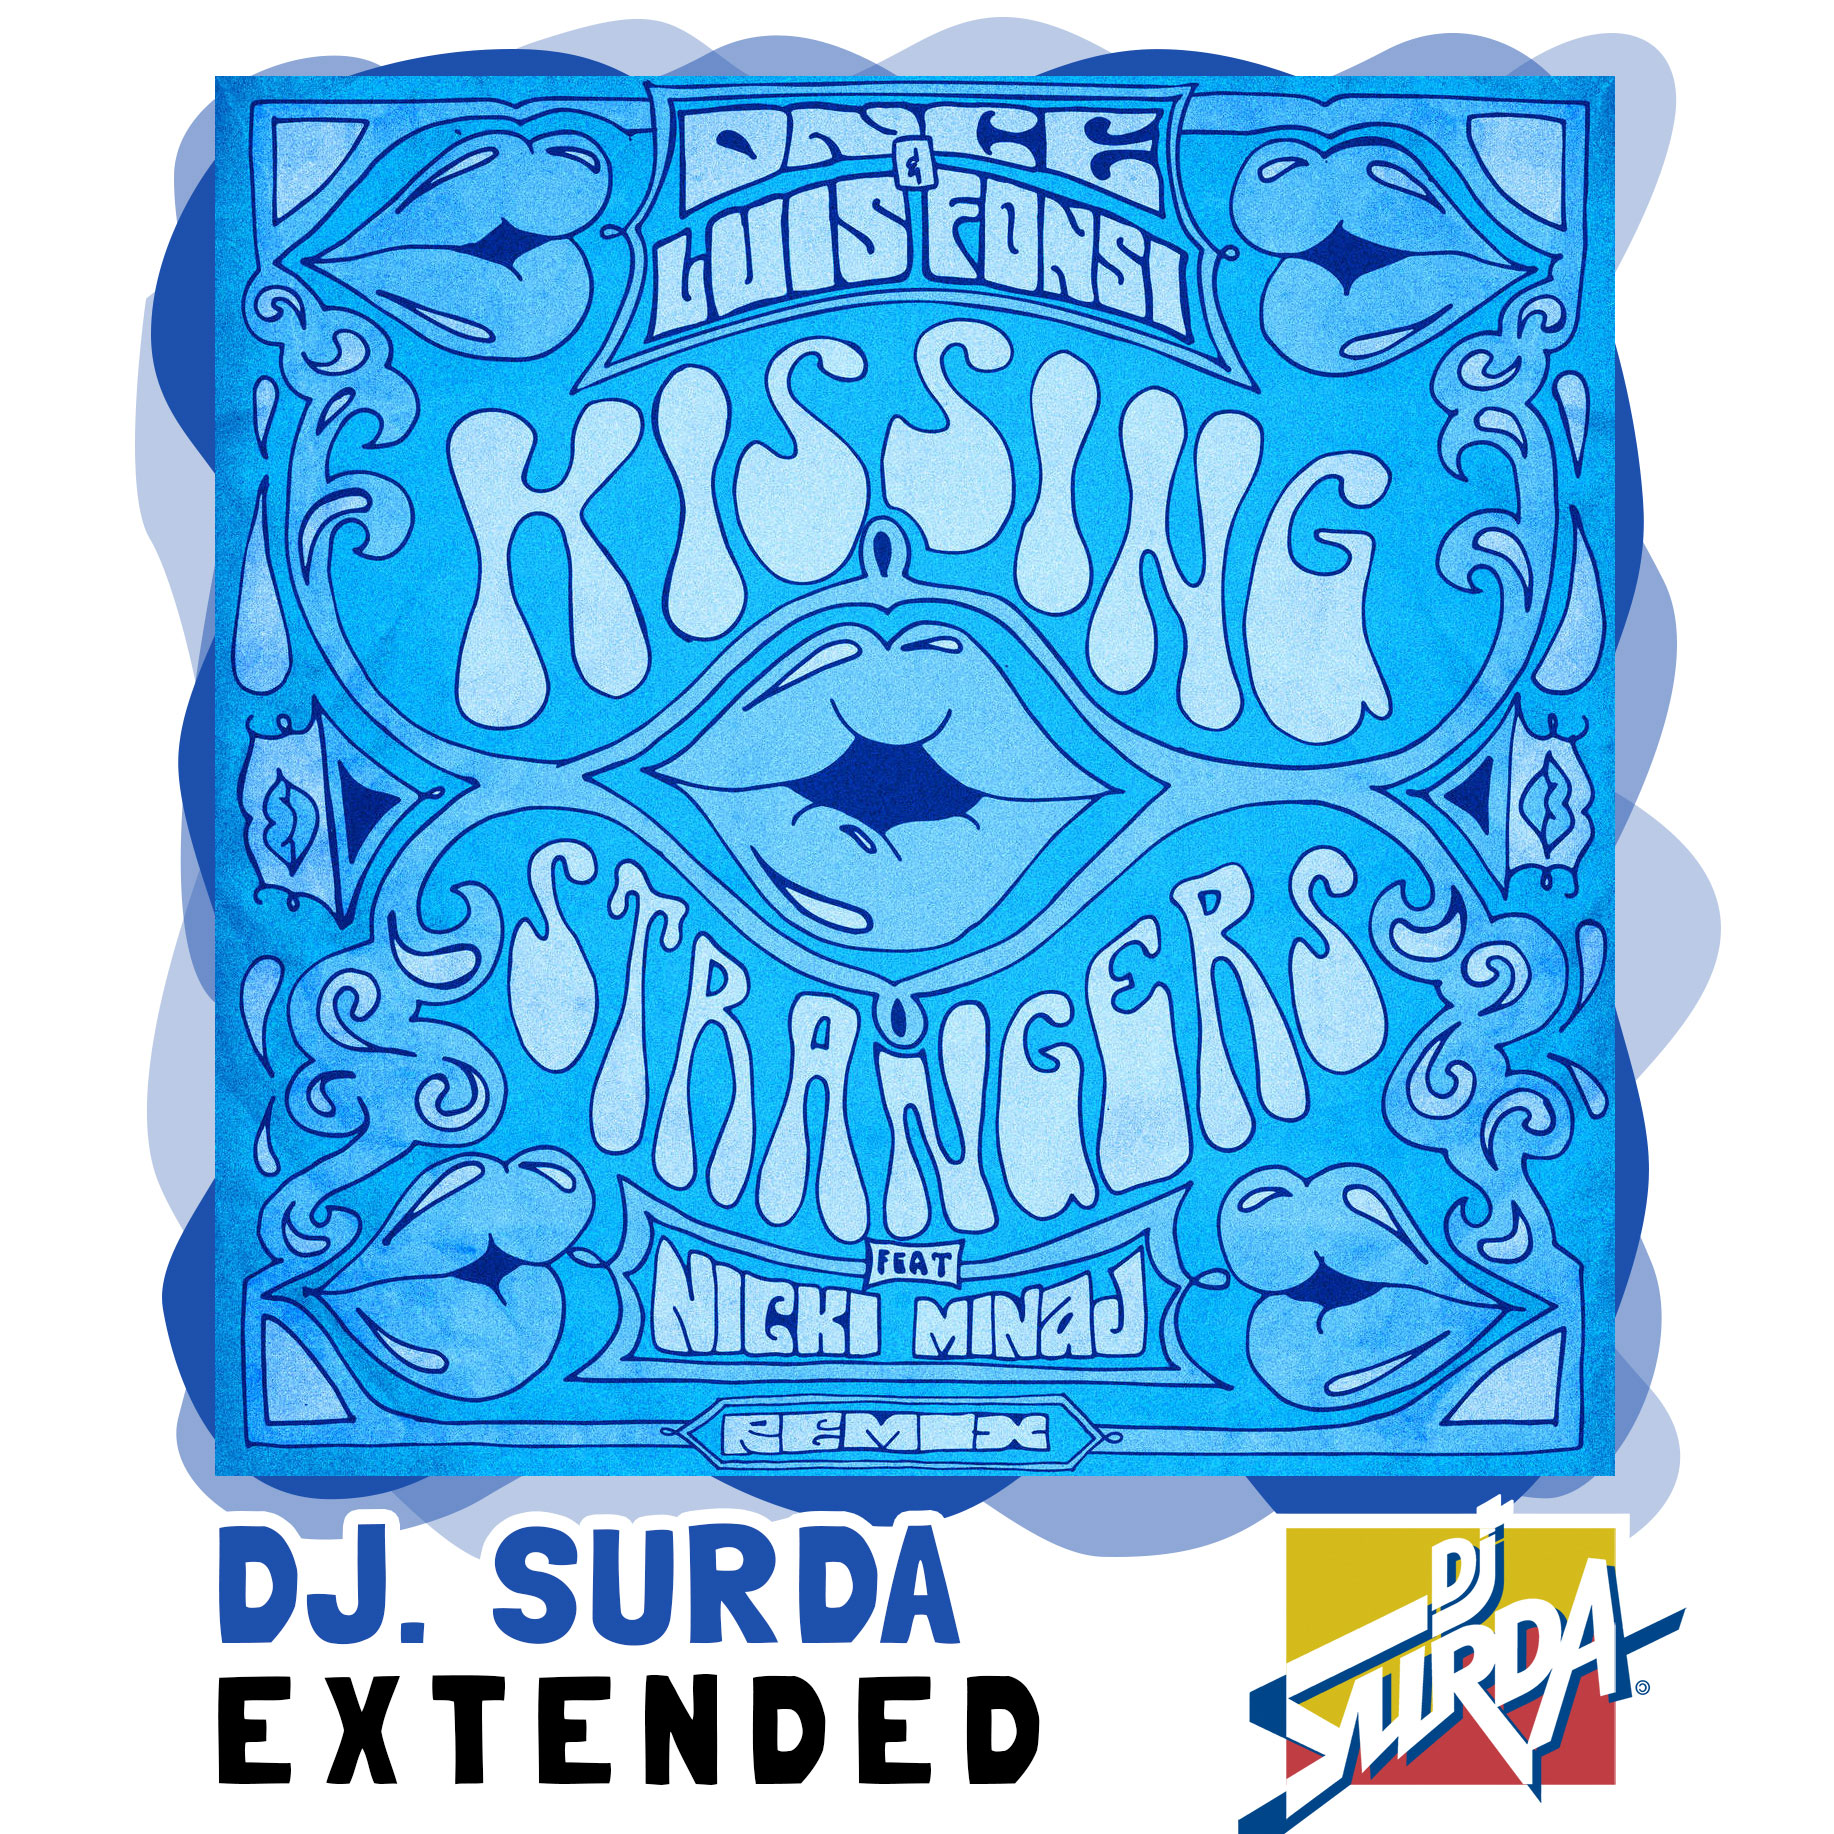 DNCE & Luis Fonsi feat. Nicki Minaj – Kissing Strangers (Remix) (Dj. Surda Extended Version)